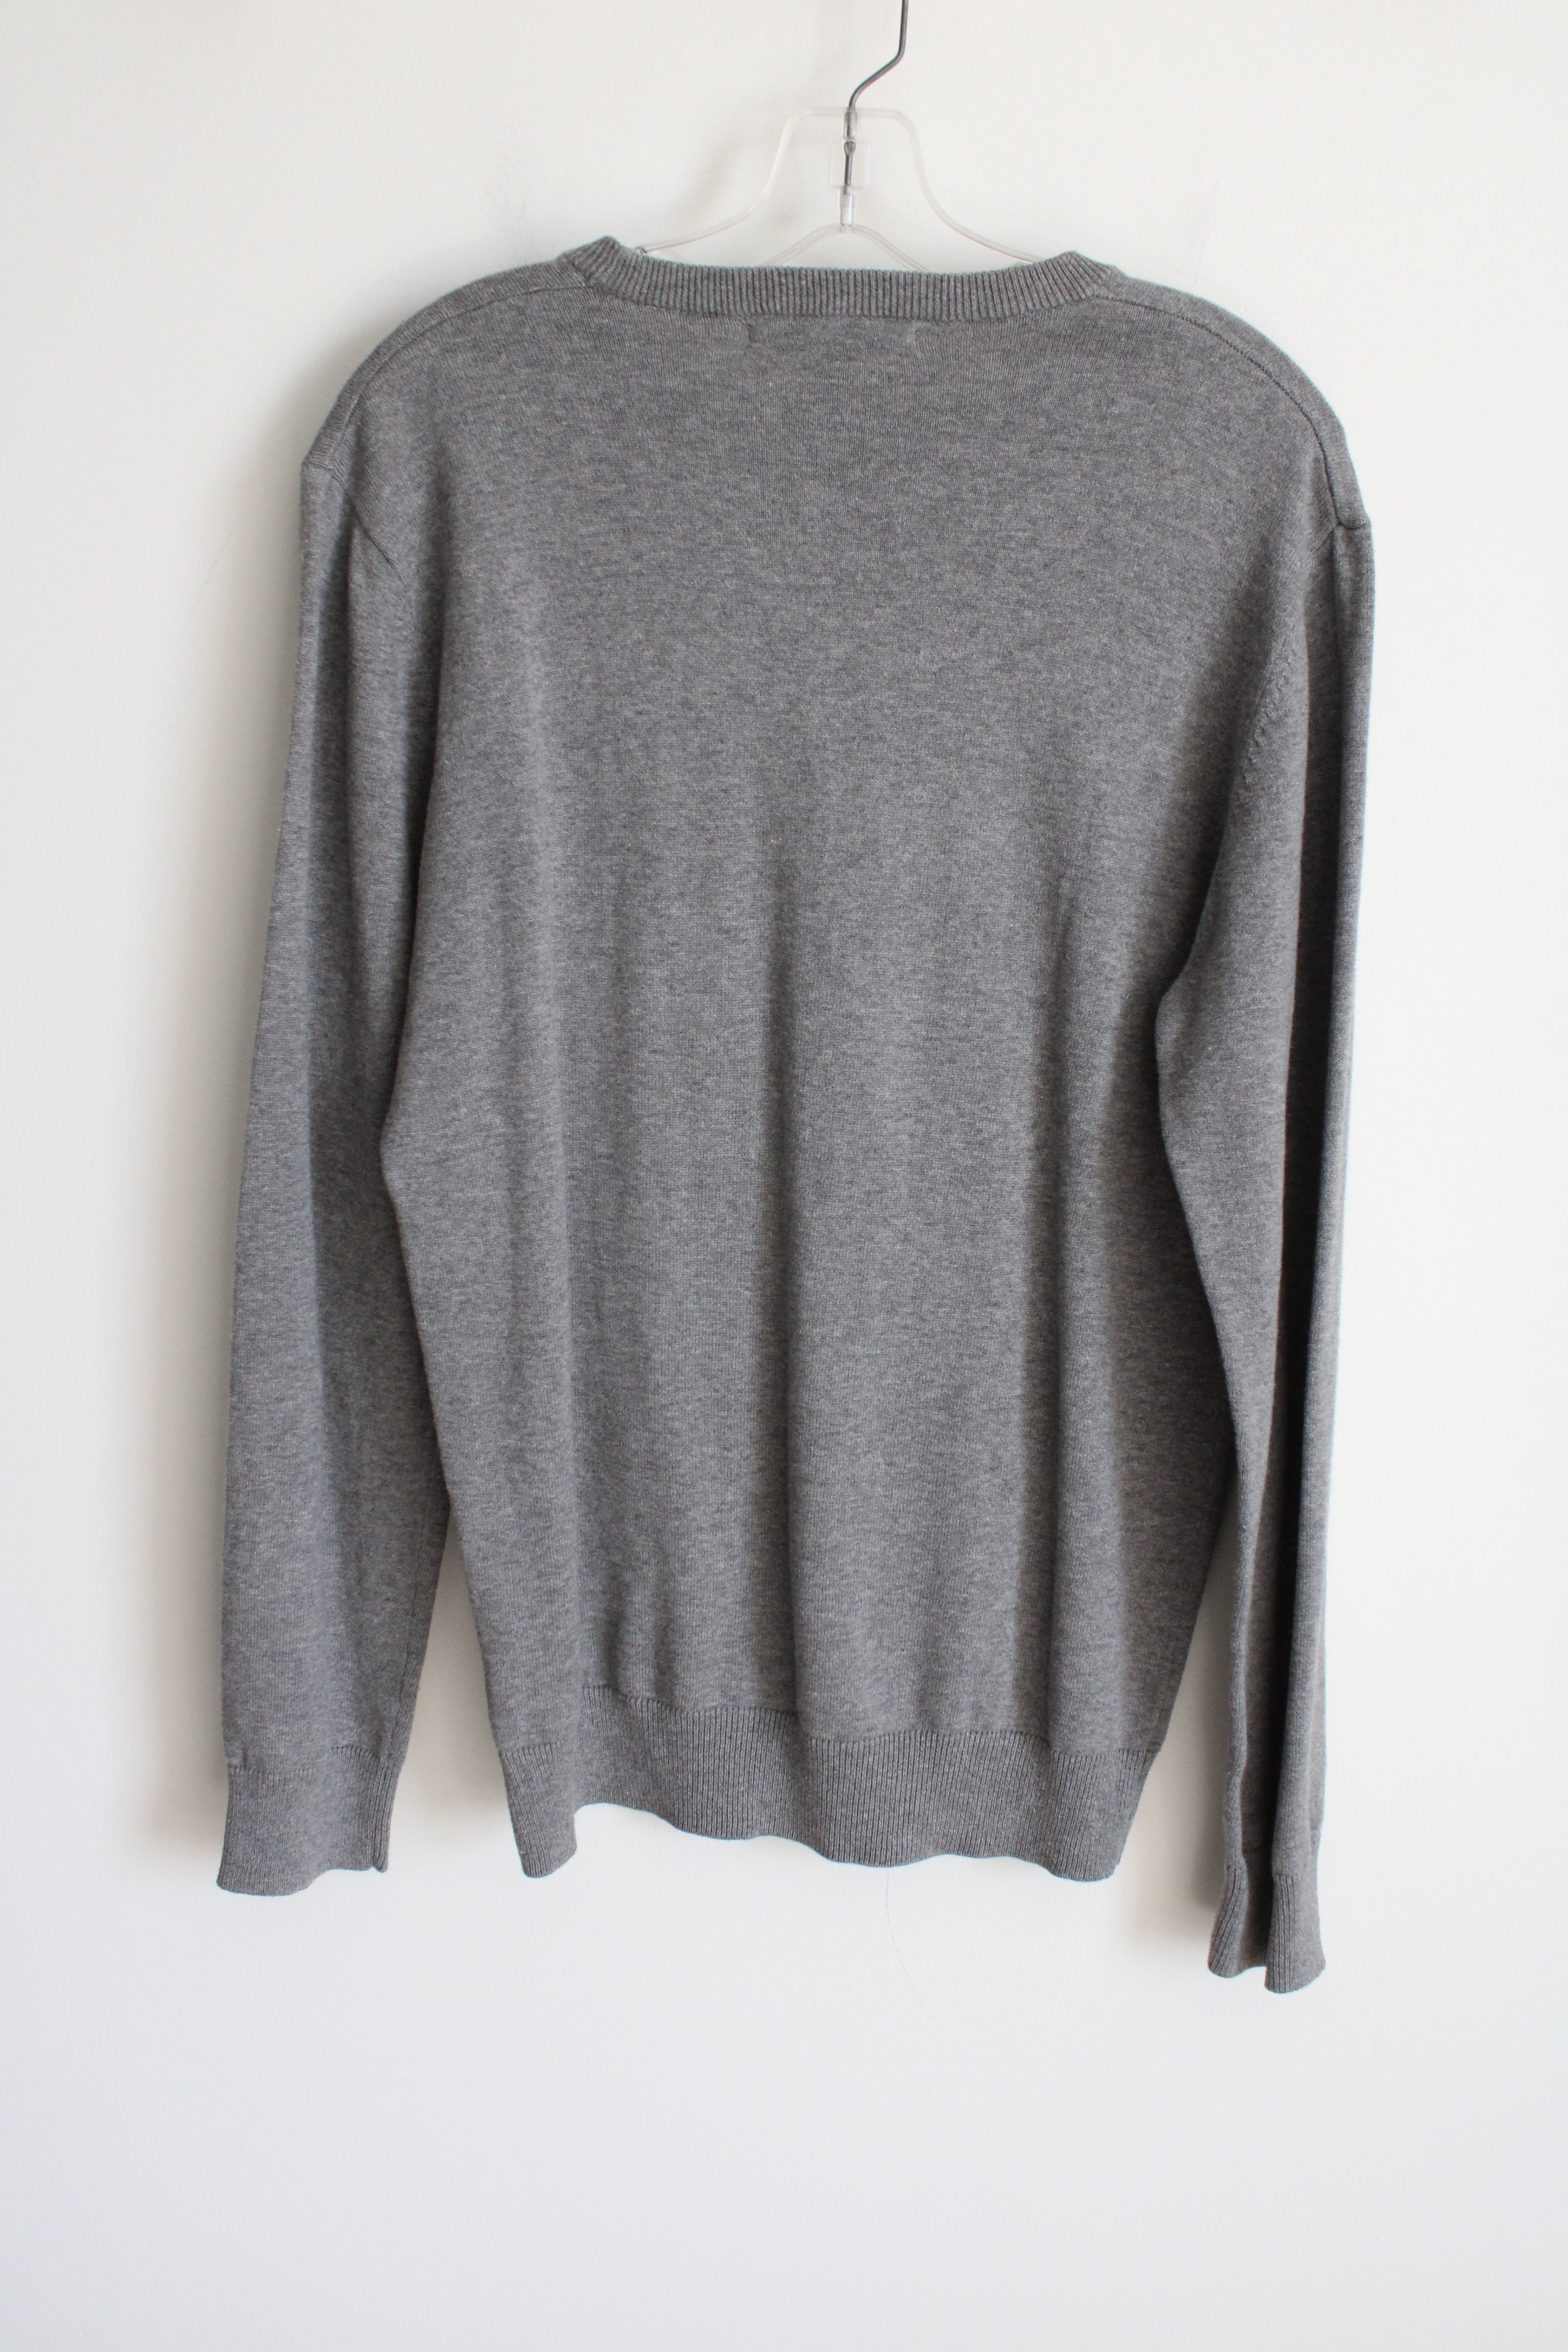 Old Navy Gray Argyle Sweater | M